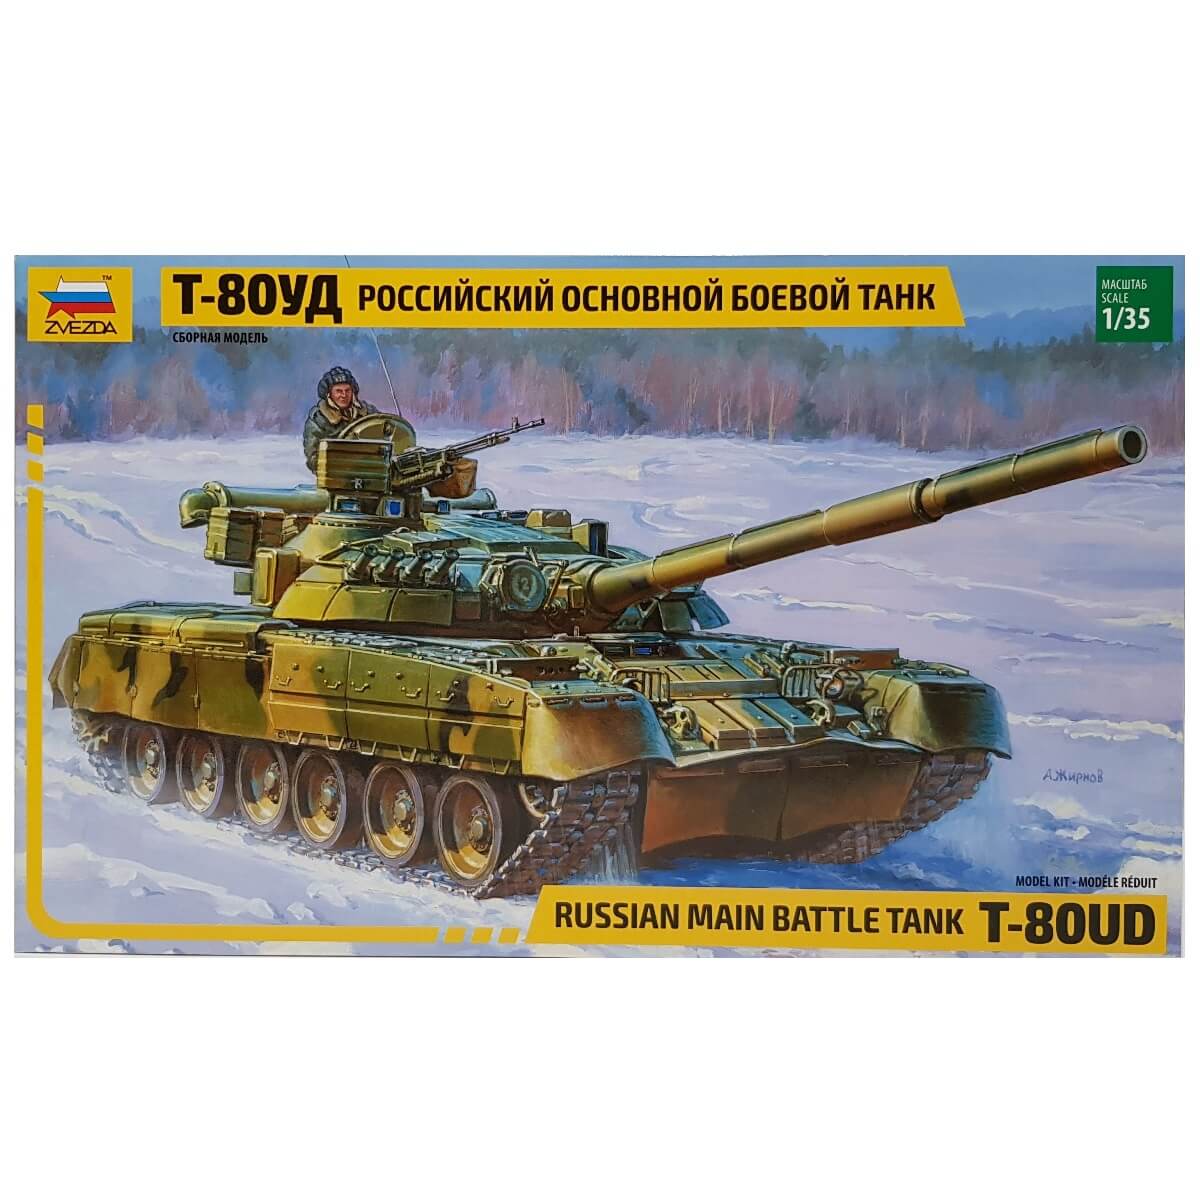 1:35 Russian Main Battle Tank T-80UD - ZVEZDA